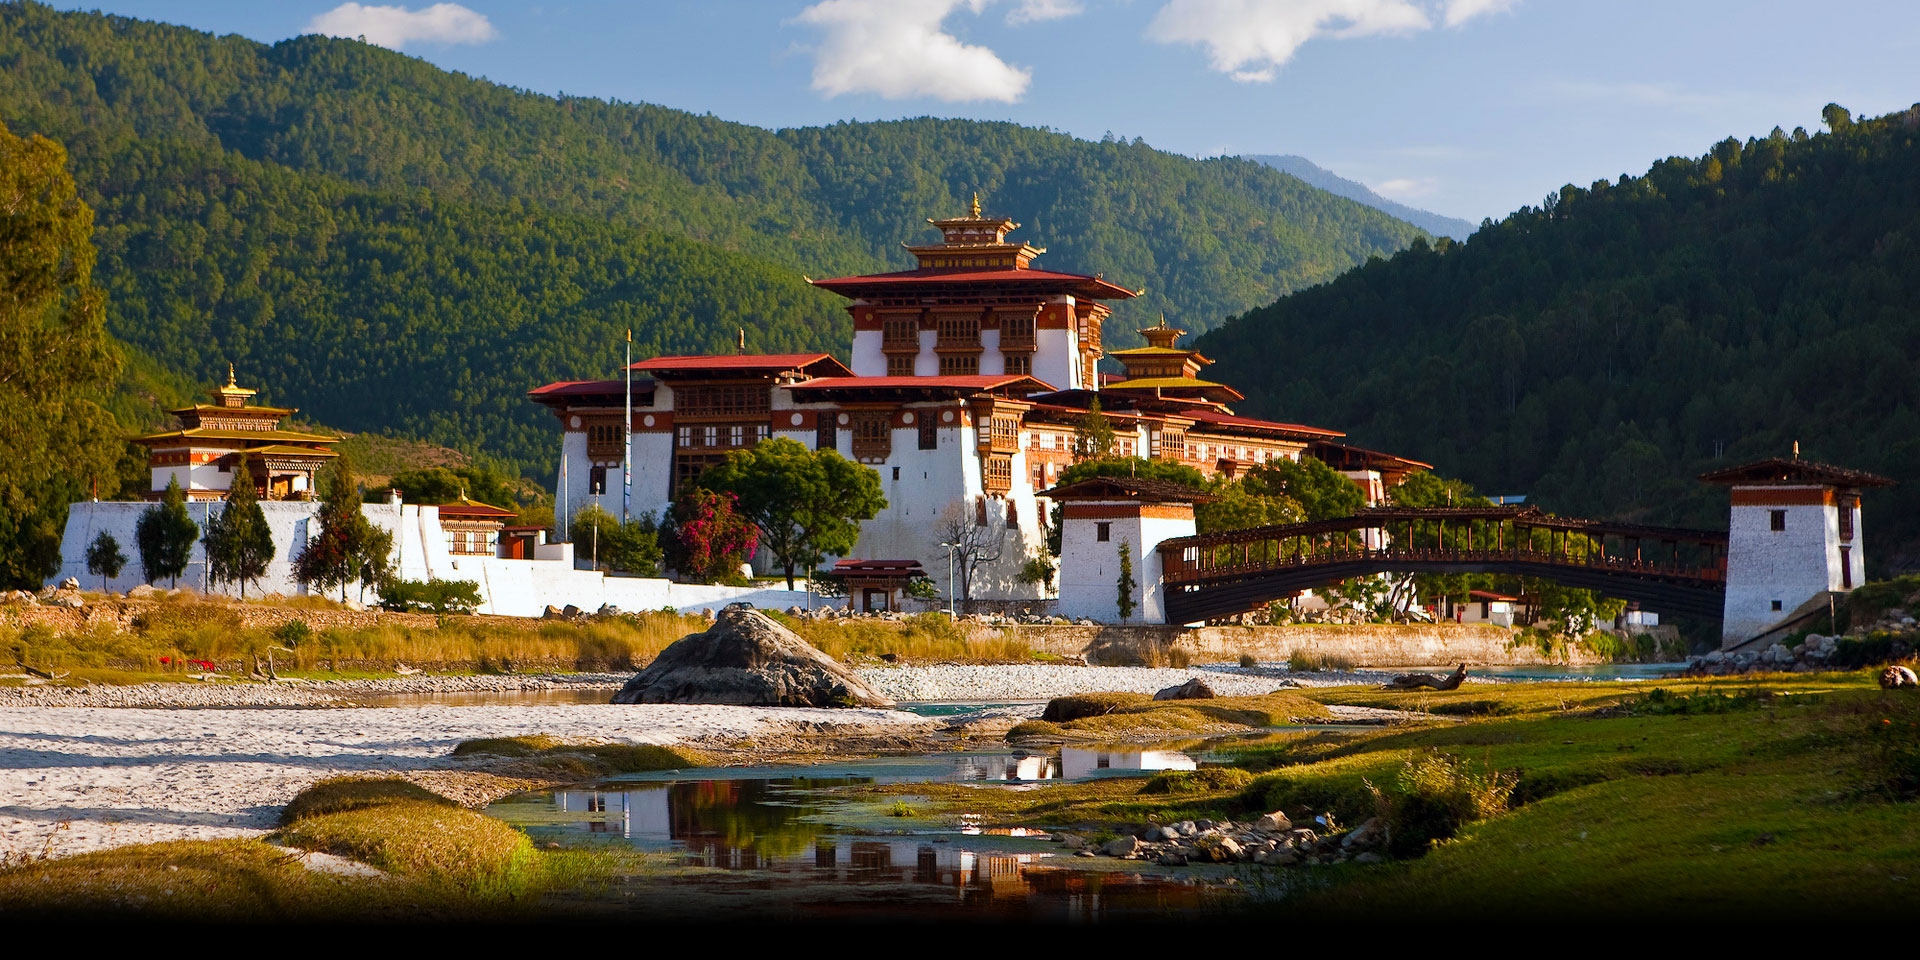 Punakha Dzong - The Summer Residence